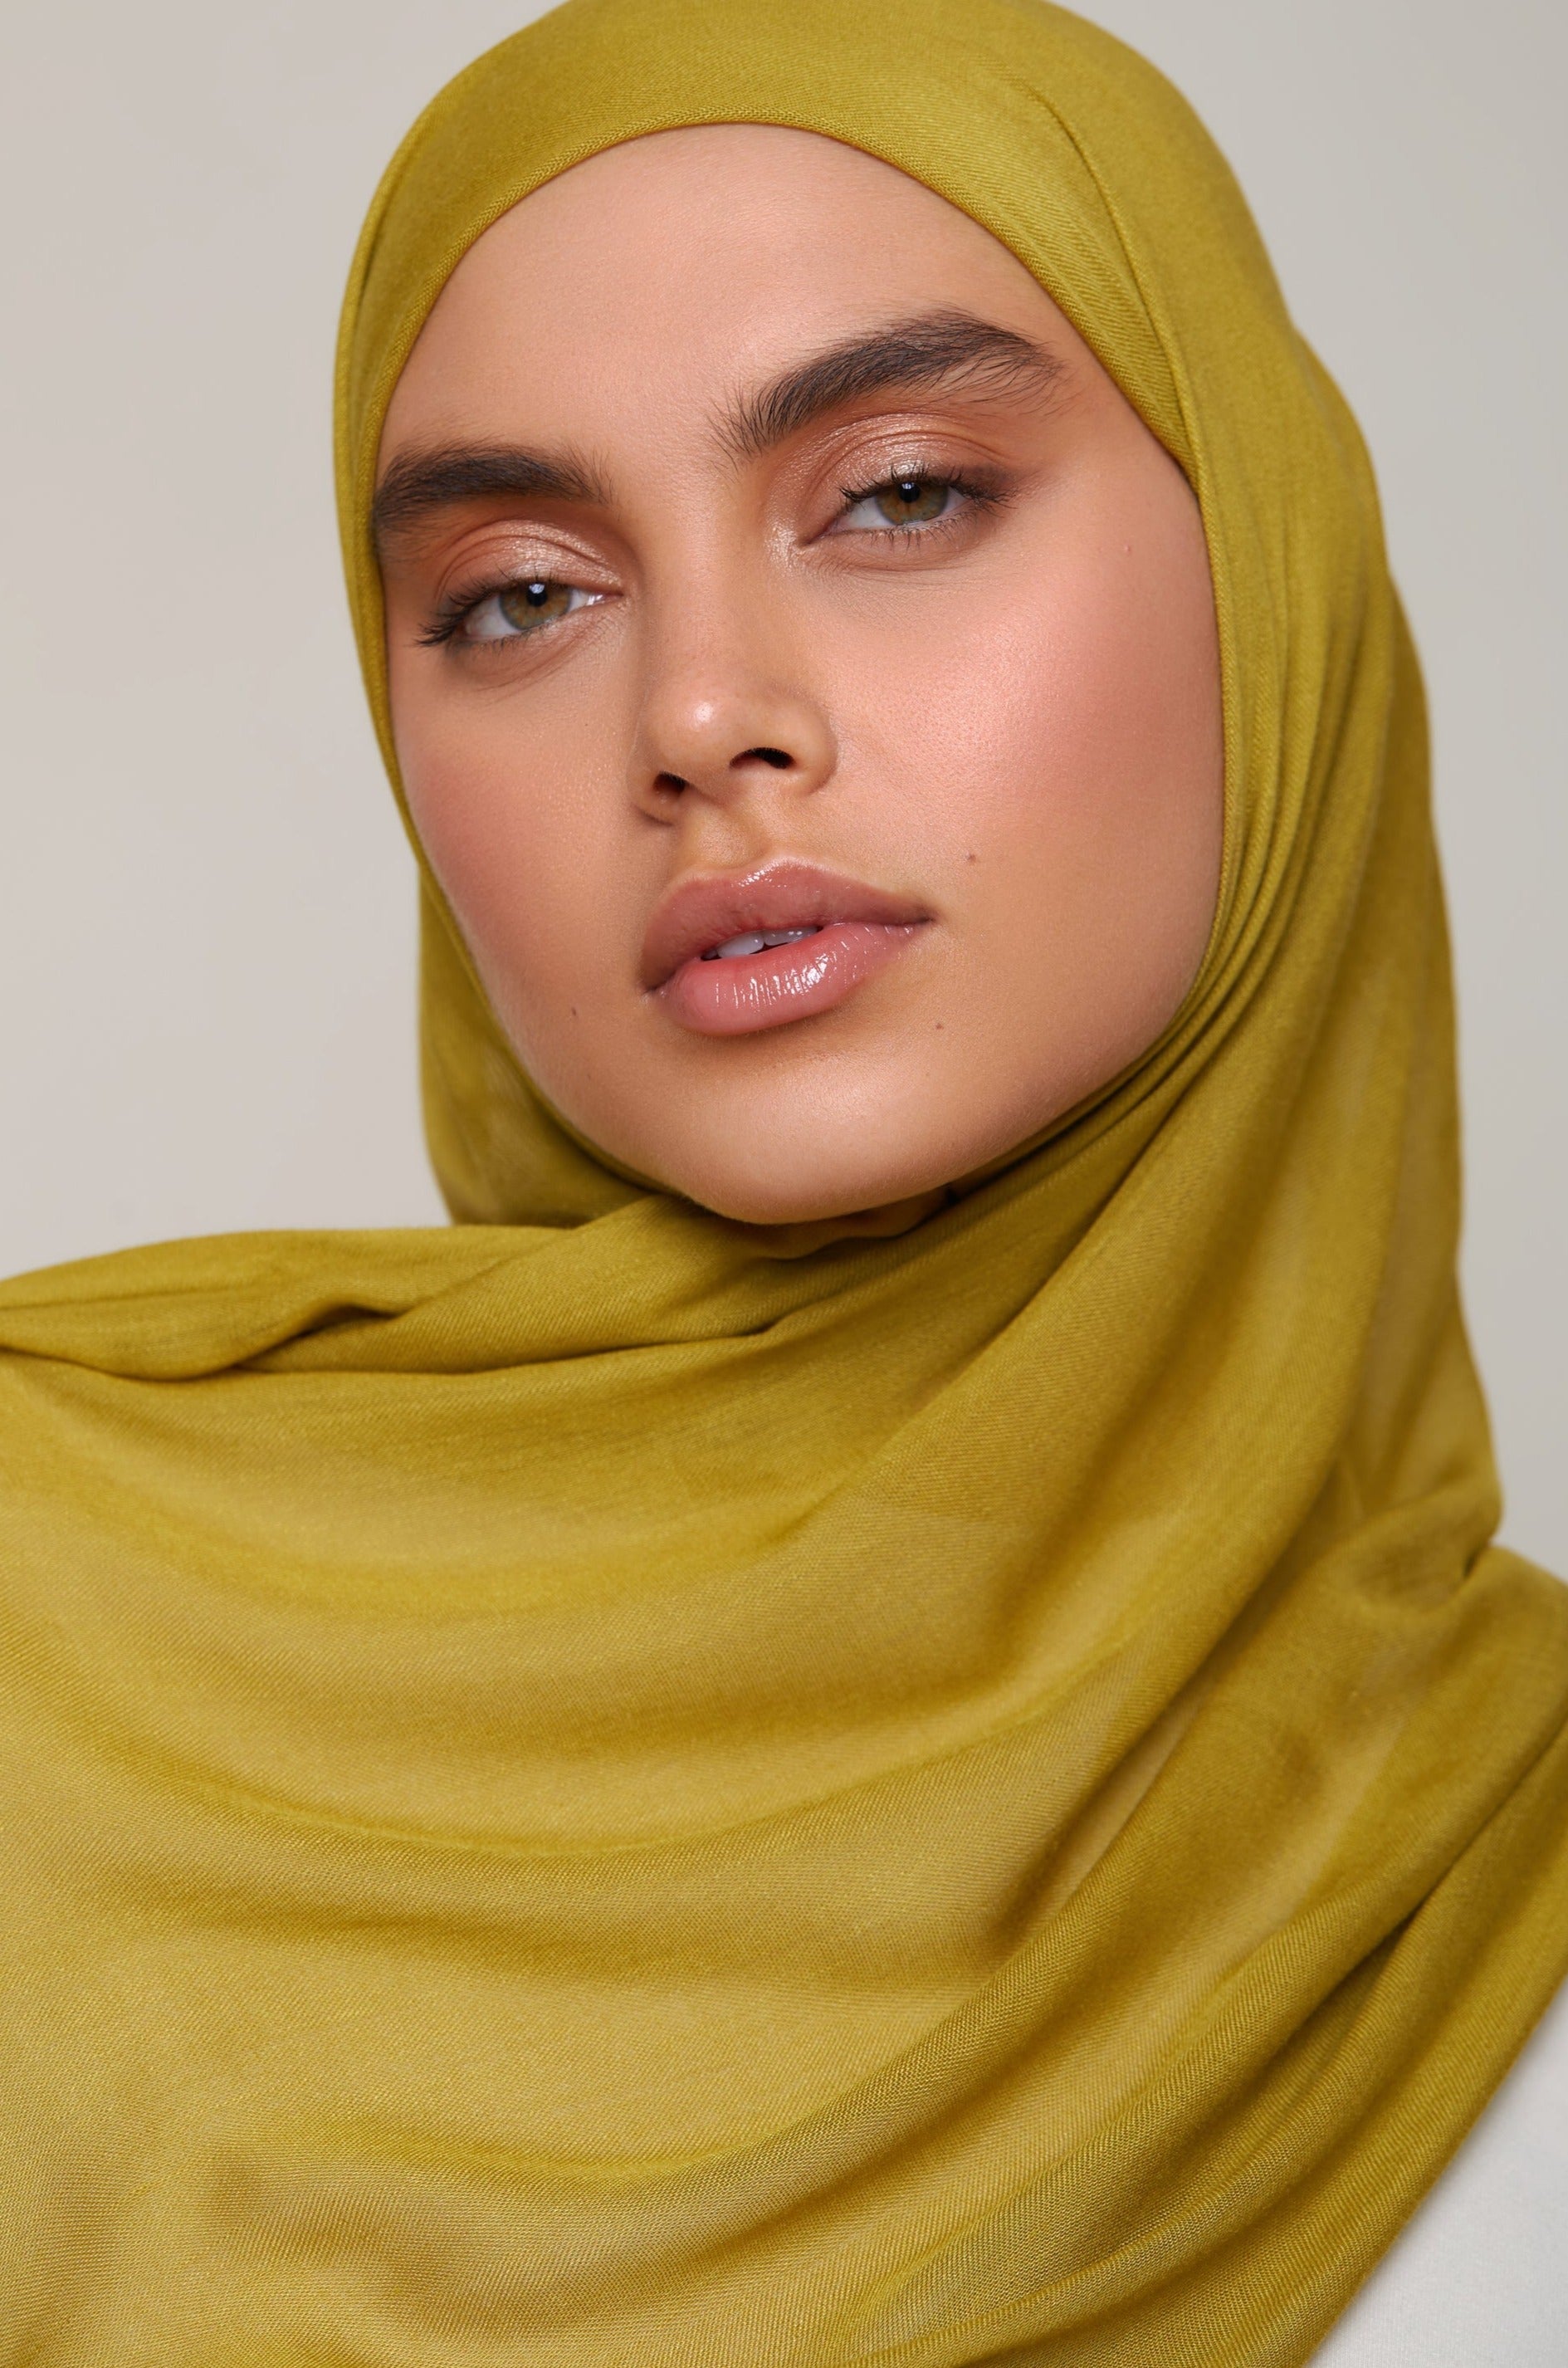 Modal Hijab - Pear epschoolboard 